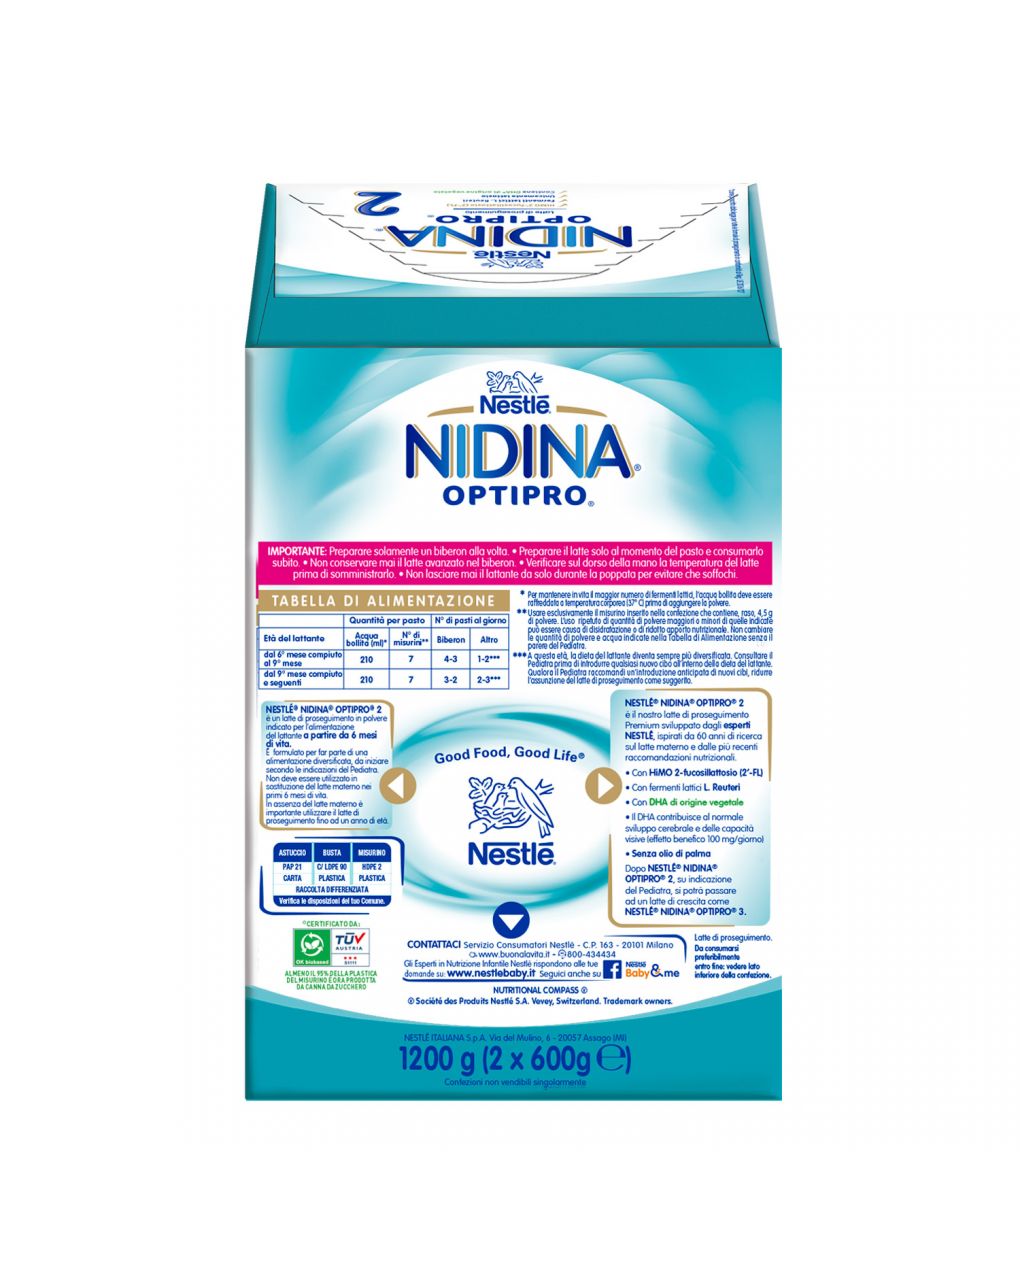 Nestlé nidina optipro 2 da 6 mesi latte di proseguimento in polvere - 1.2 kg (2x600g) - Nestlé